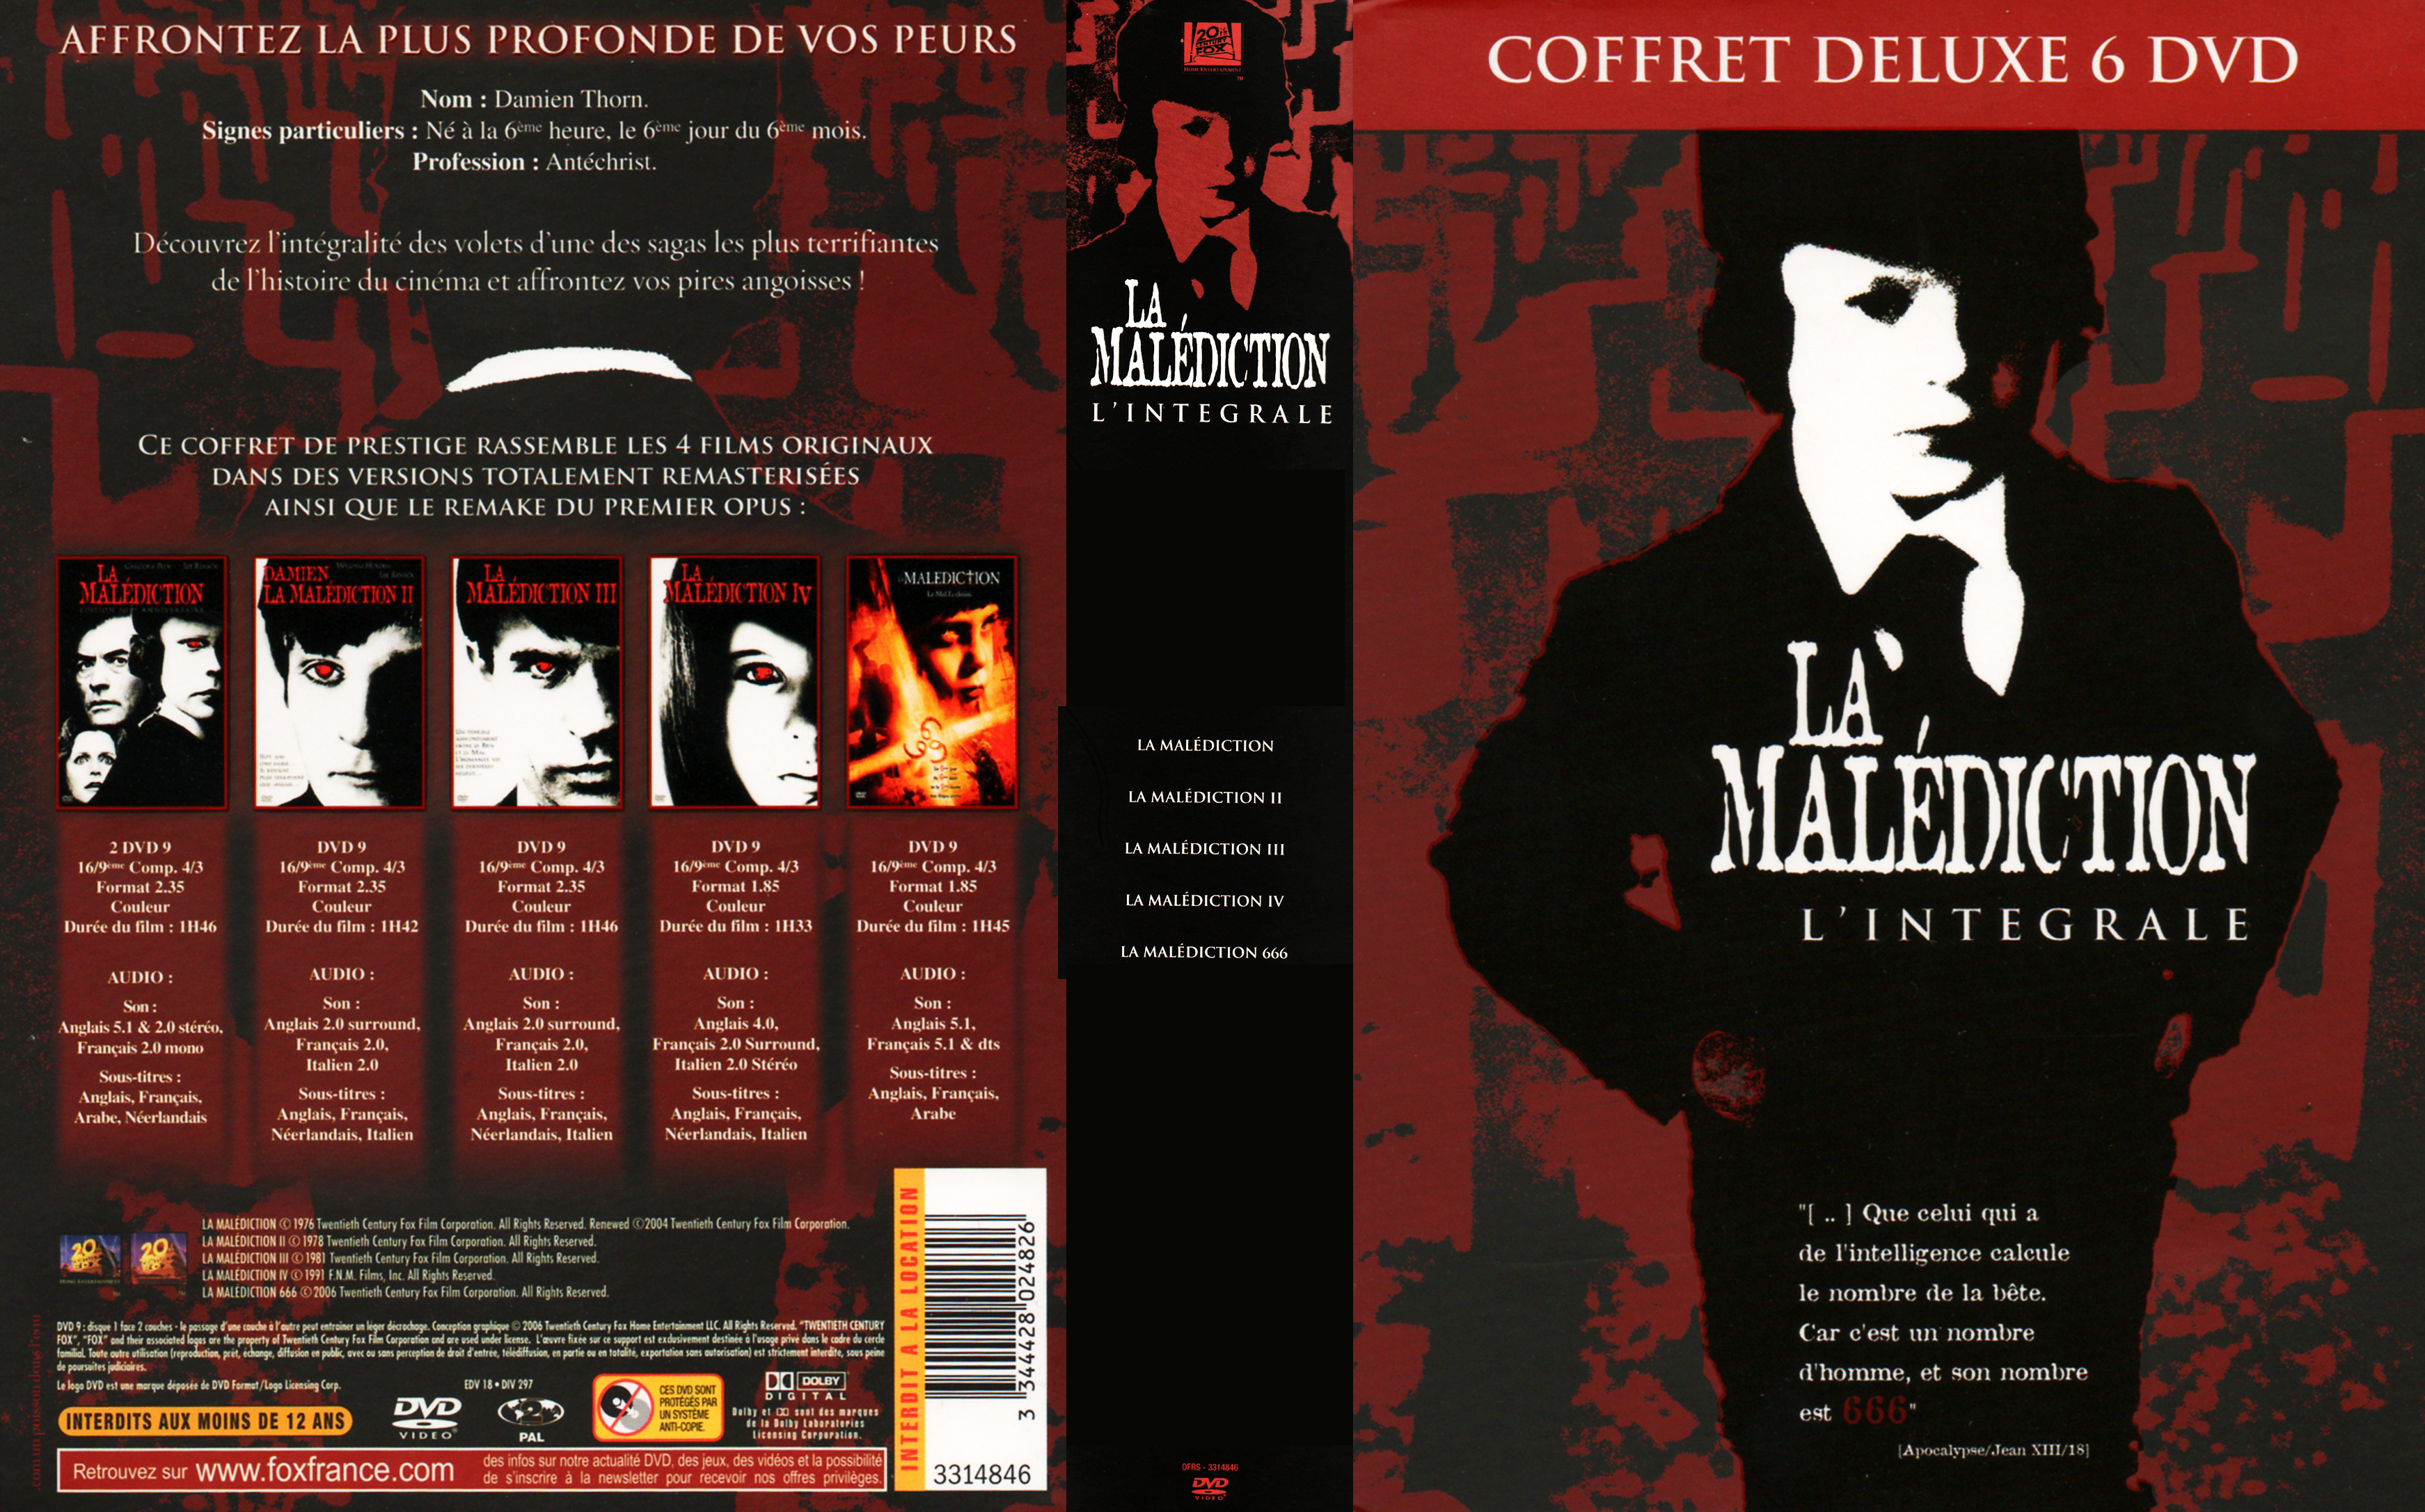 Jaquette DVD La maldiction Integrale COFFRET